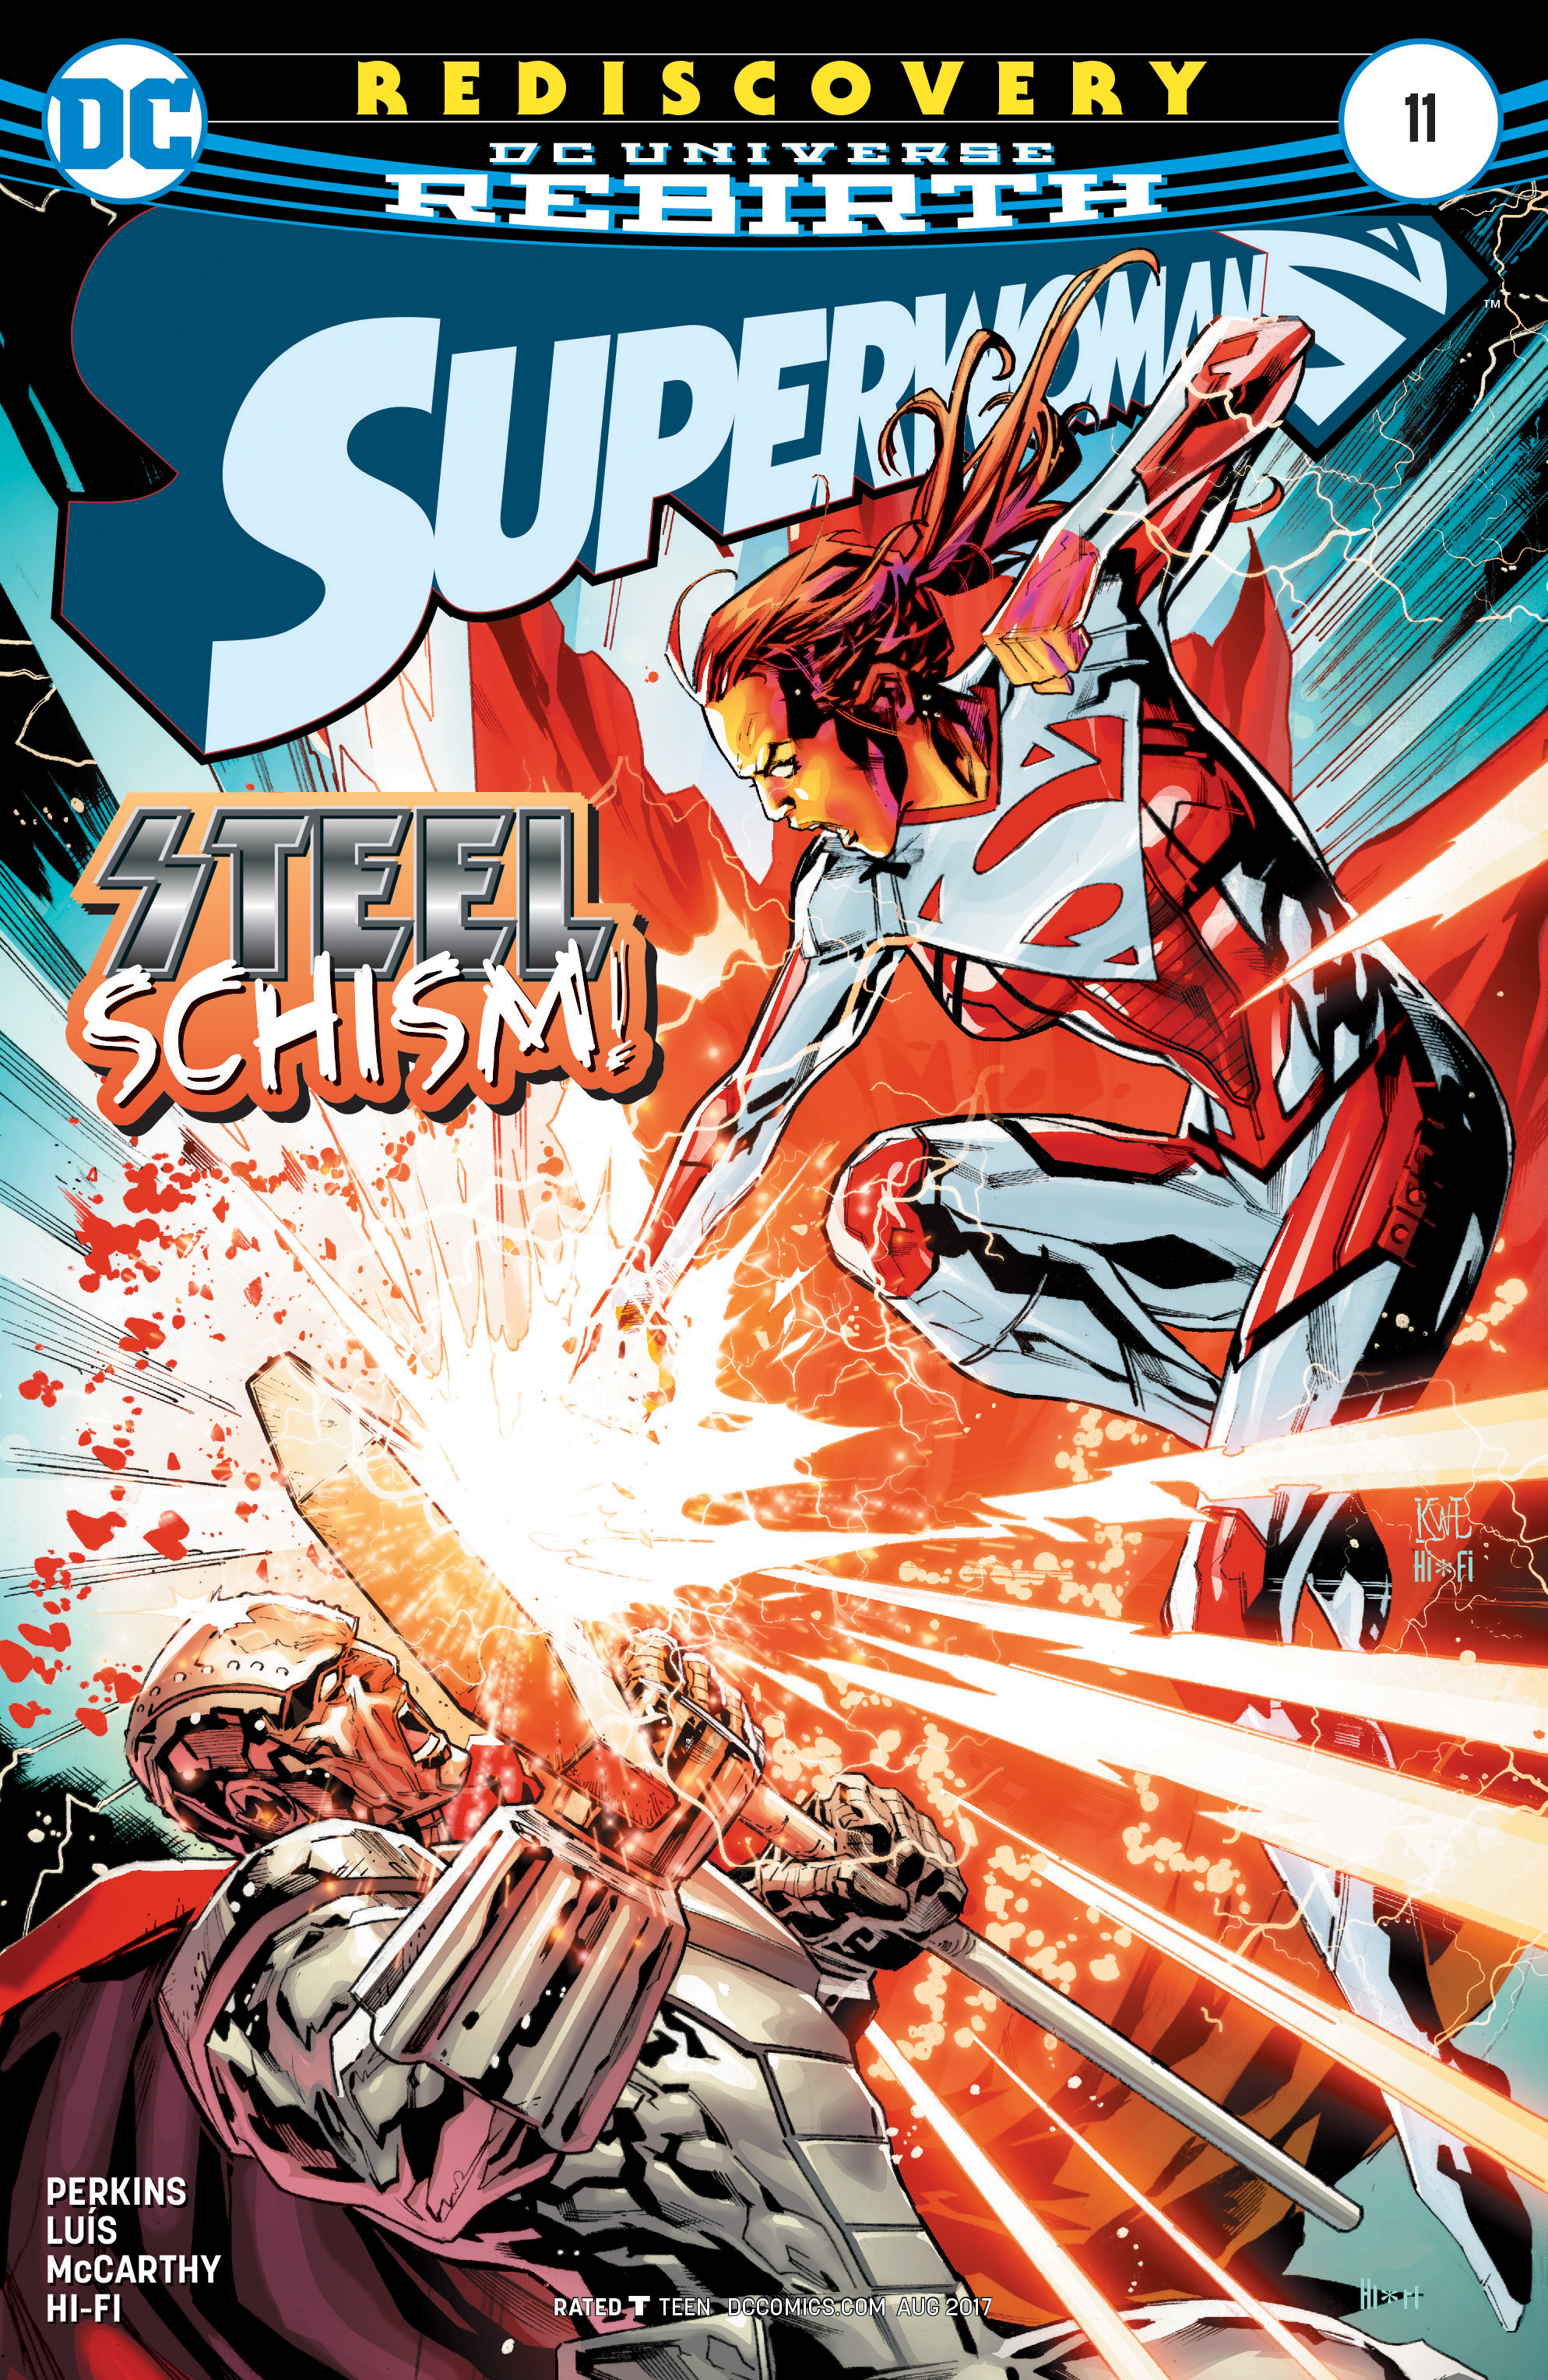 SUPERWOMAN #11